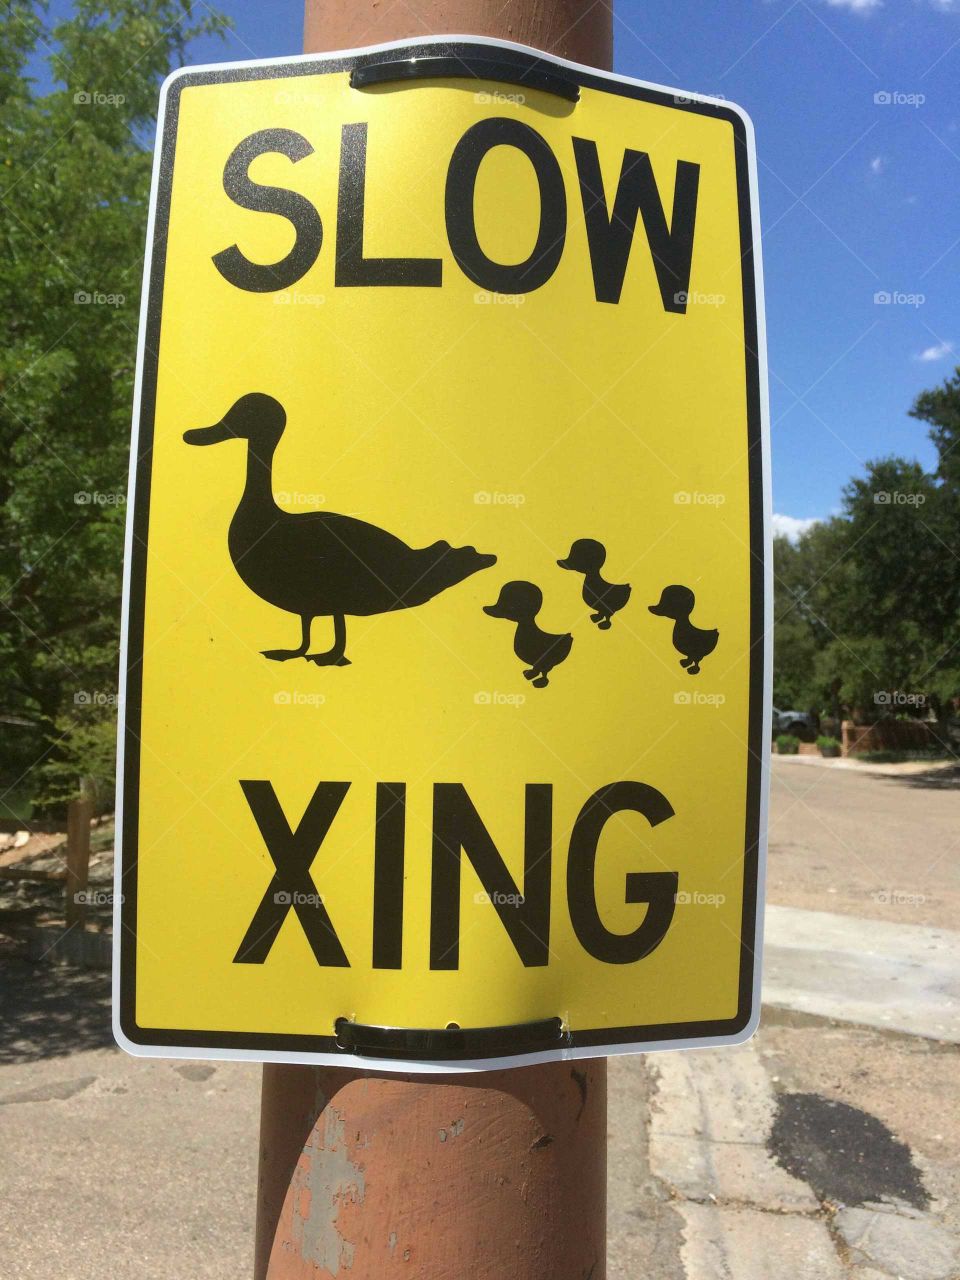 Slow down fer ducks